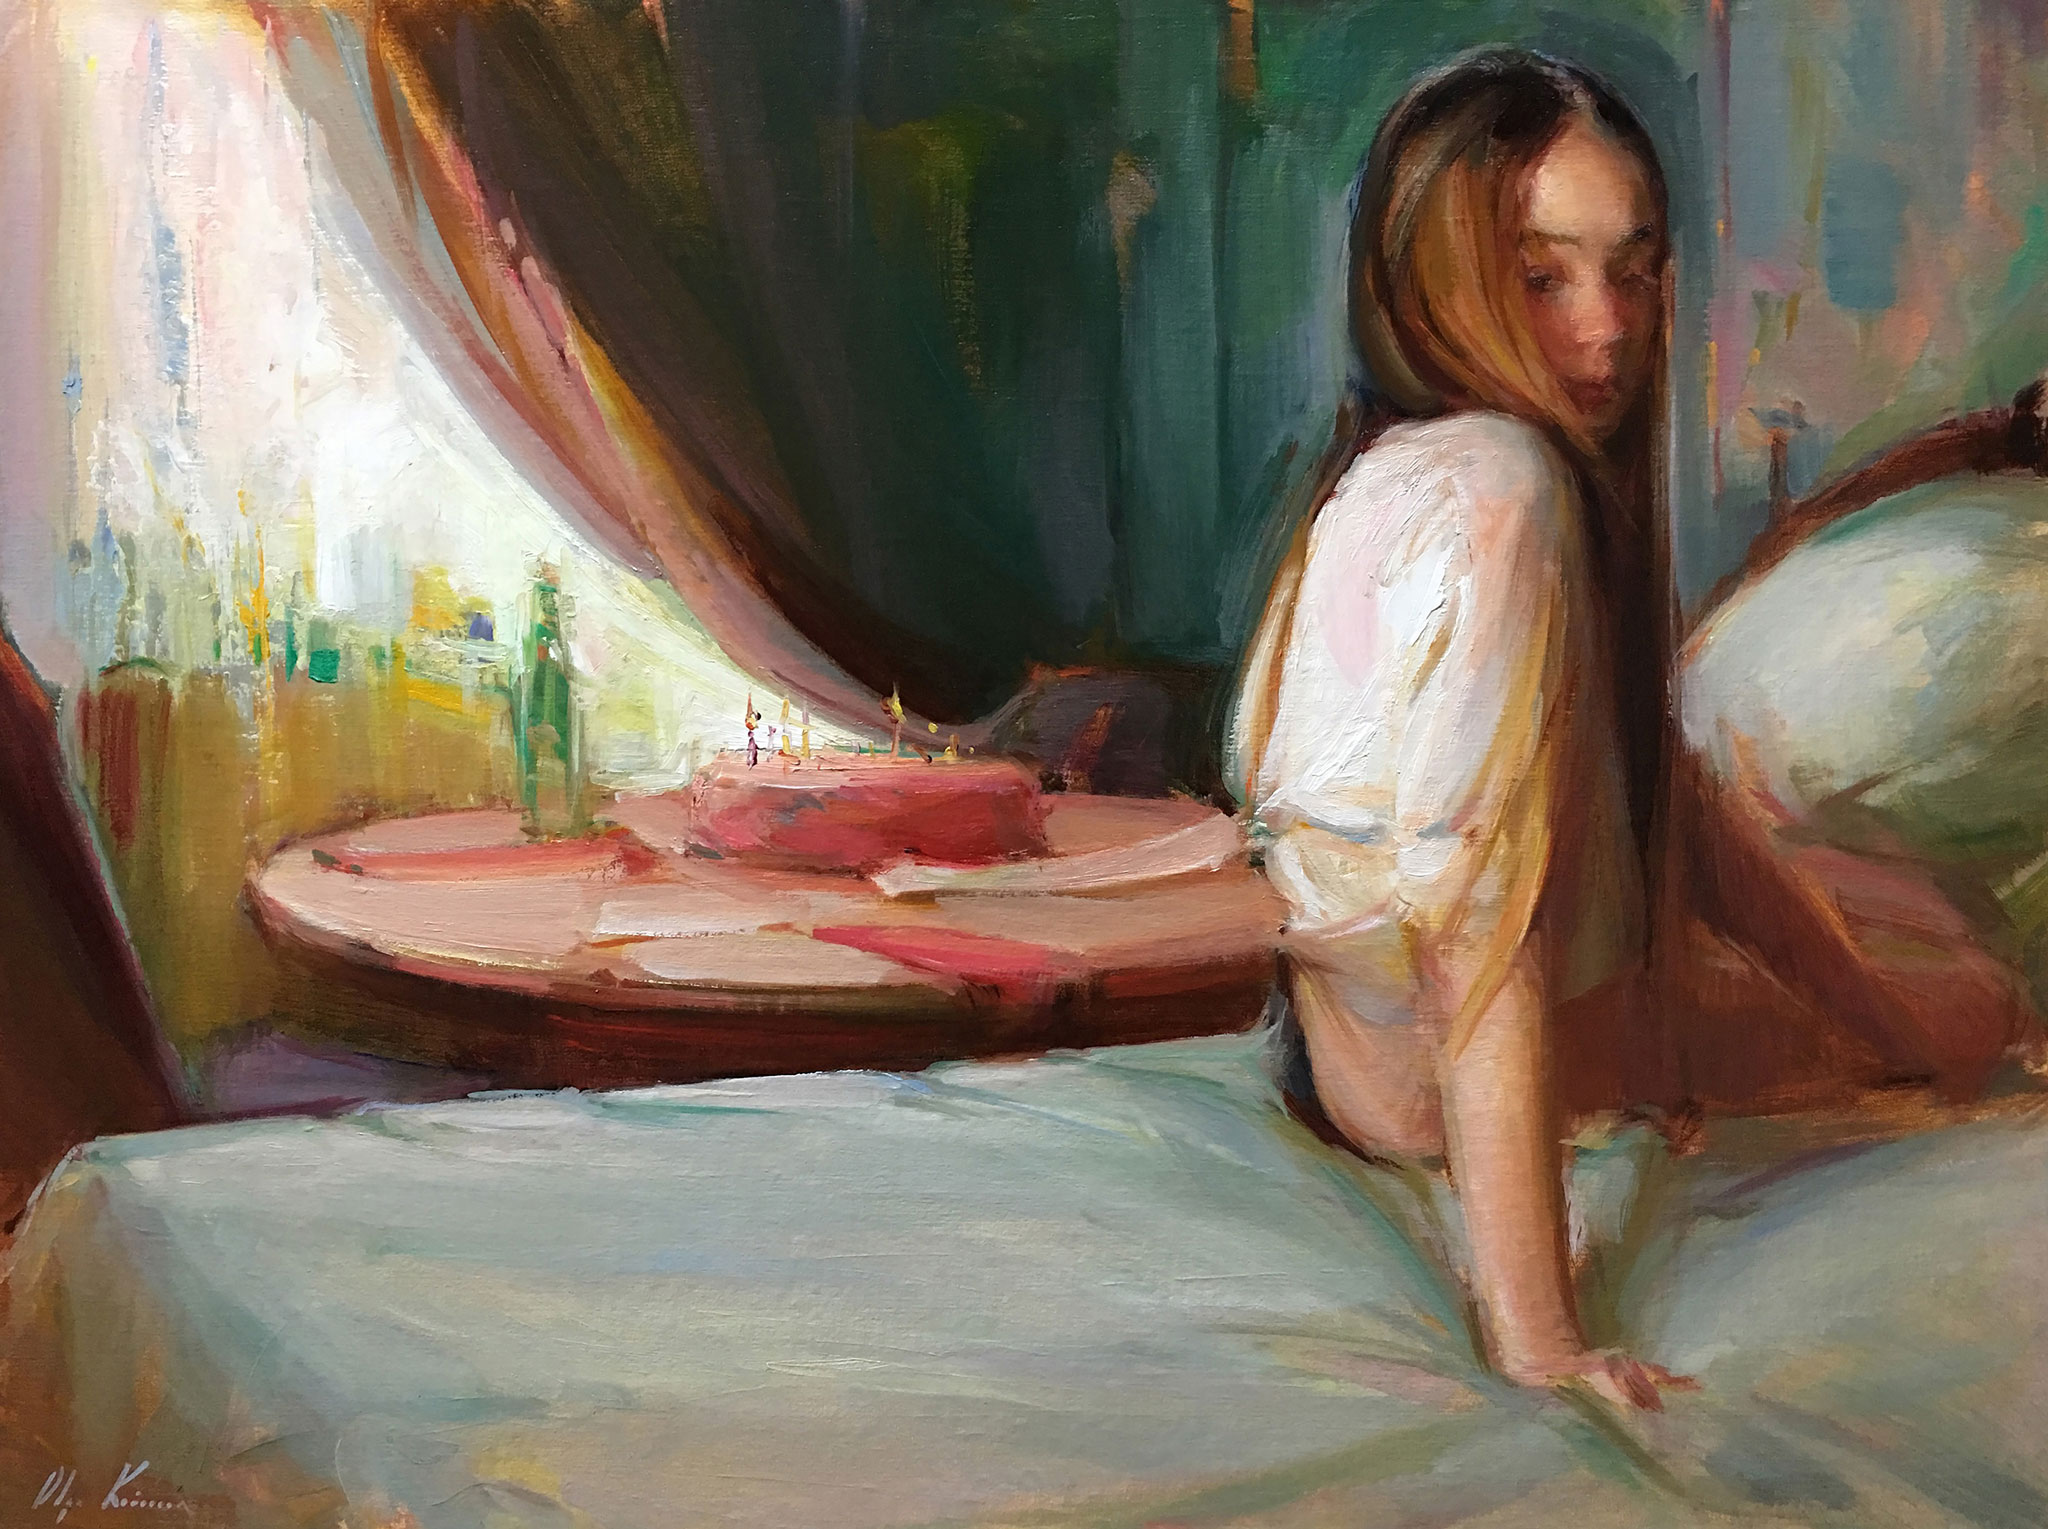 Painting composition - Olga Krimon - RealismToday.com